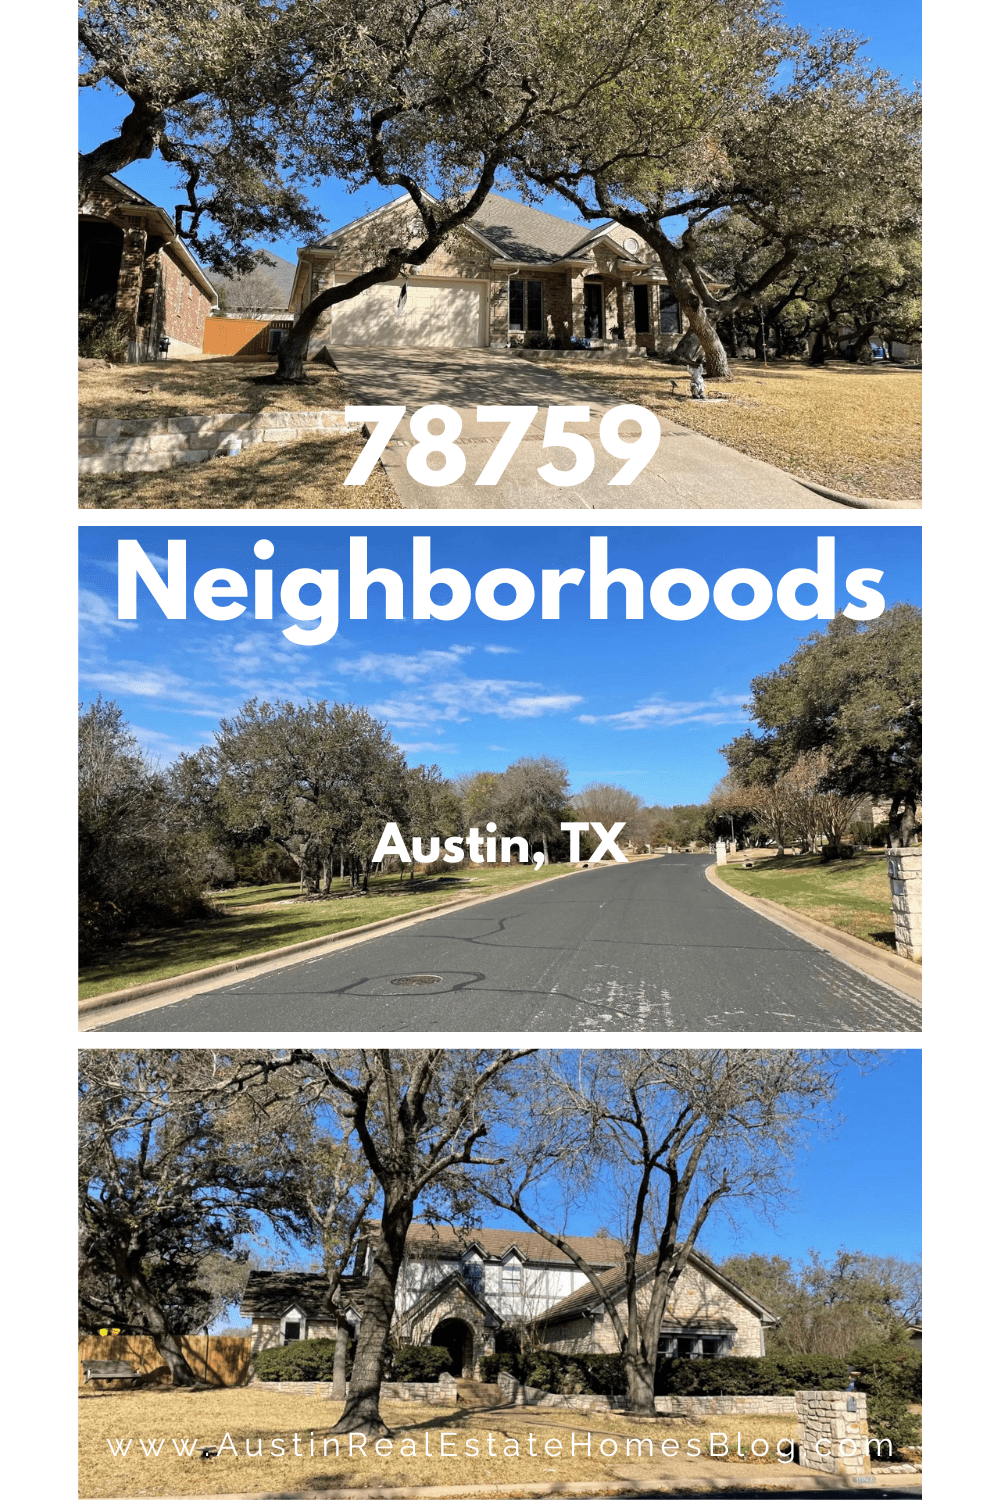 78759 neighborhoods in Austin TX